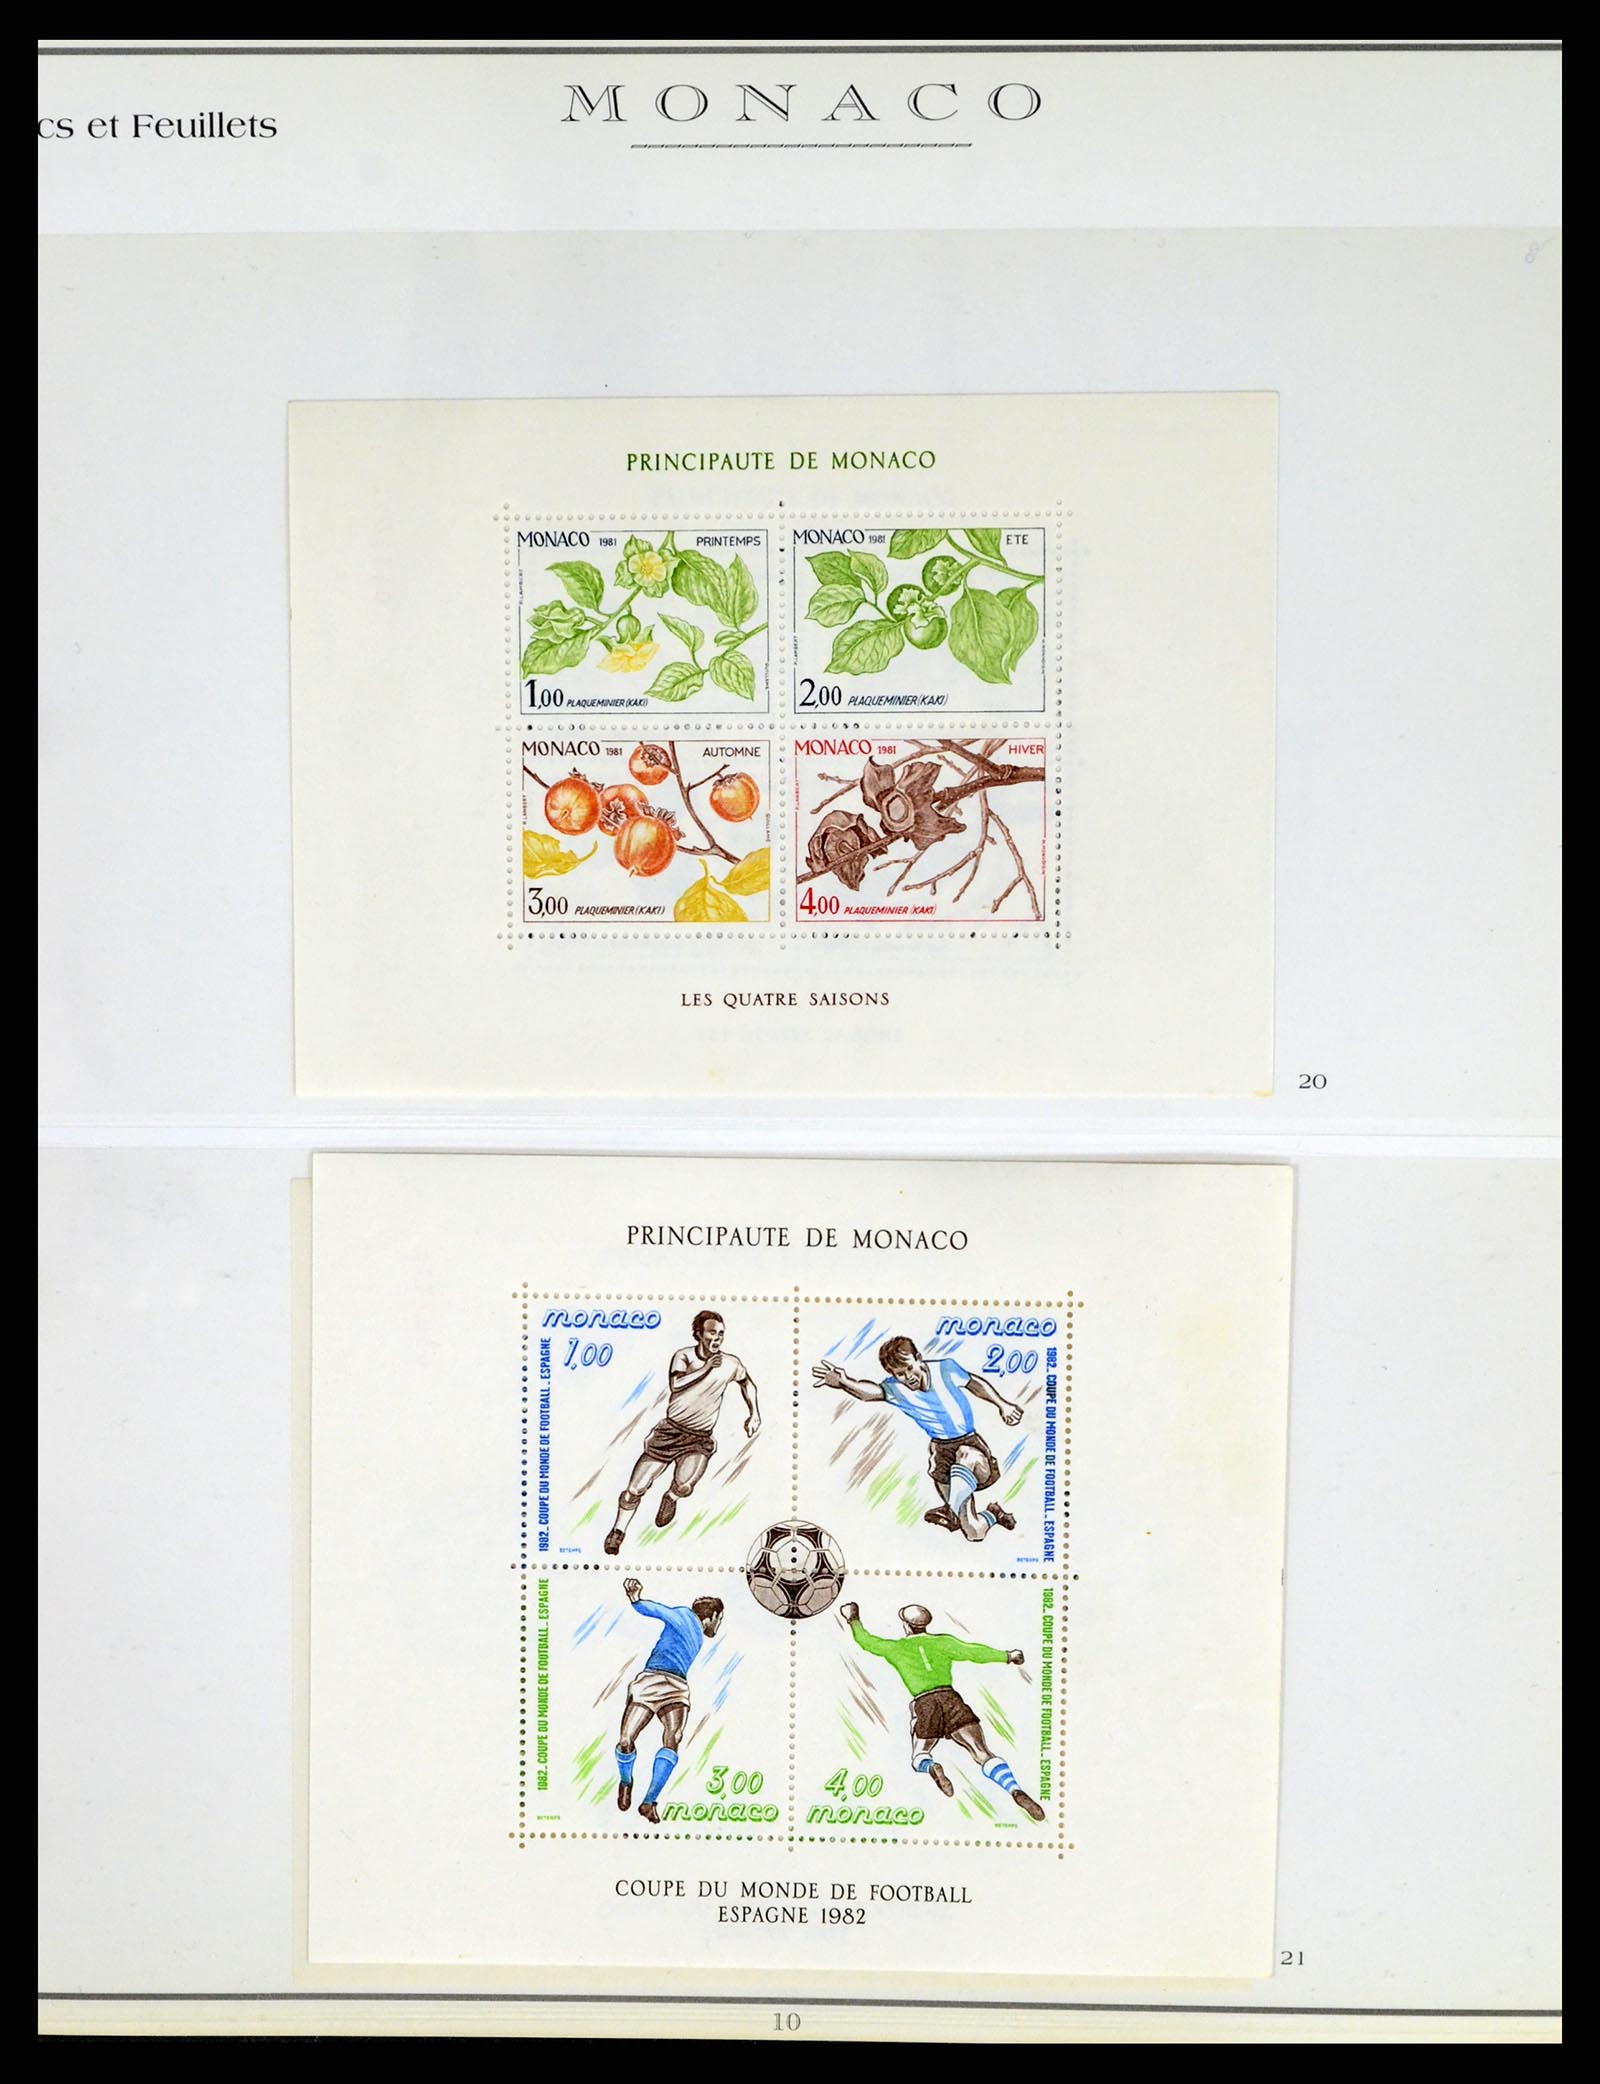 37437 180 - Stamp collection 37437 Monaco 1885-1996.